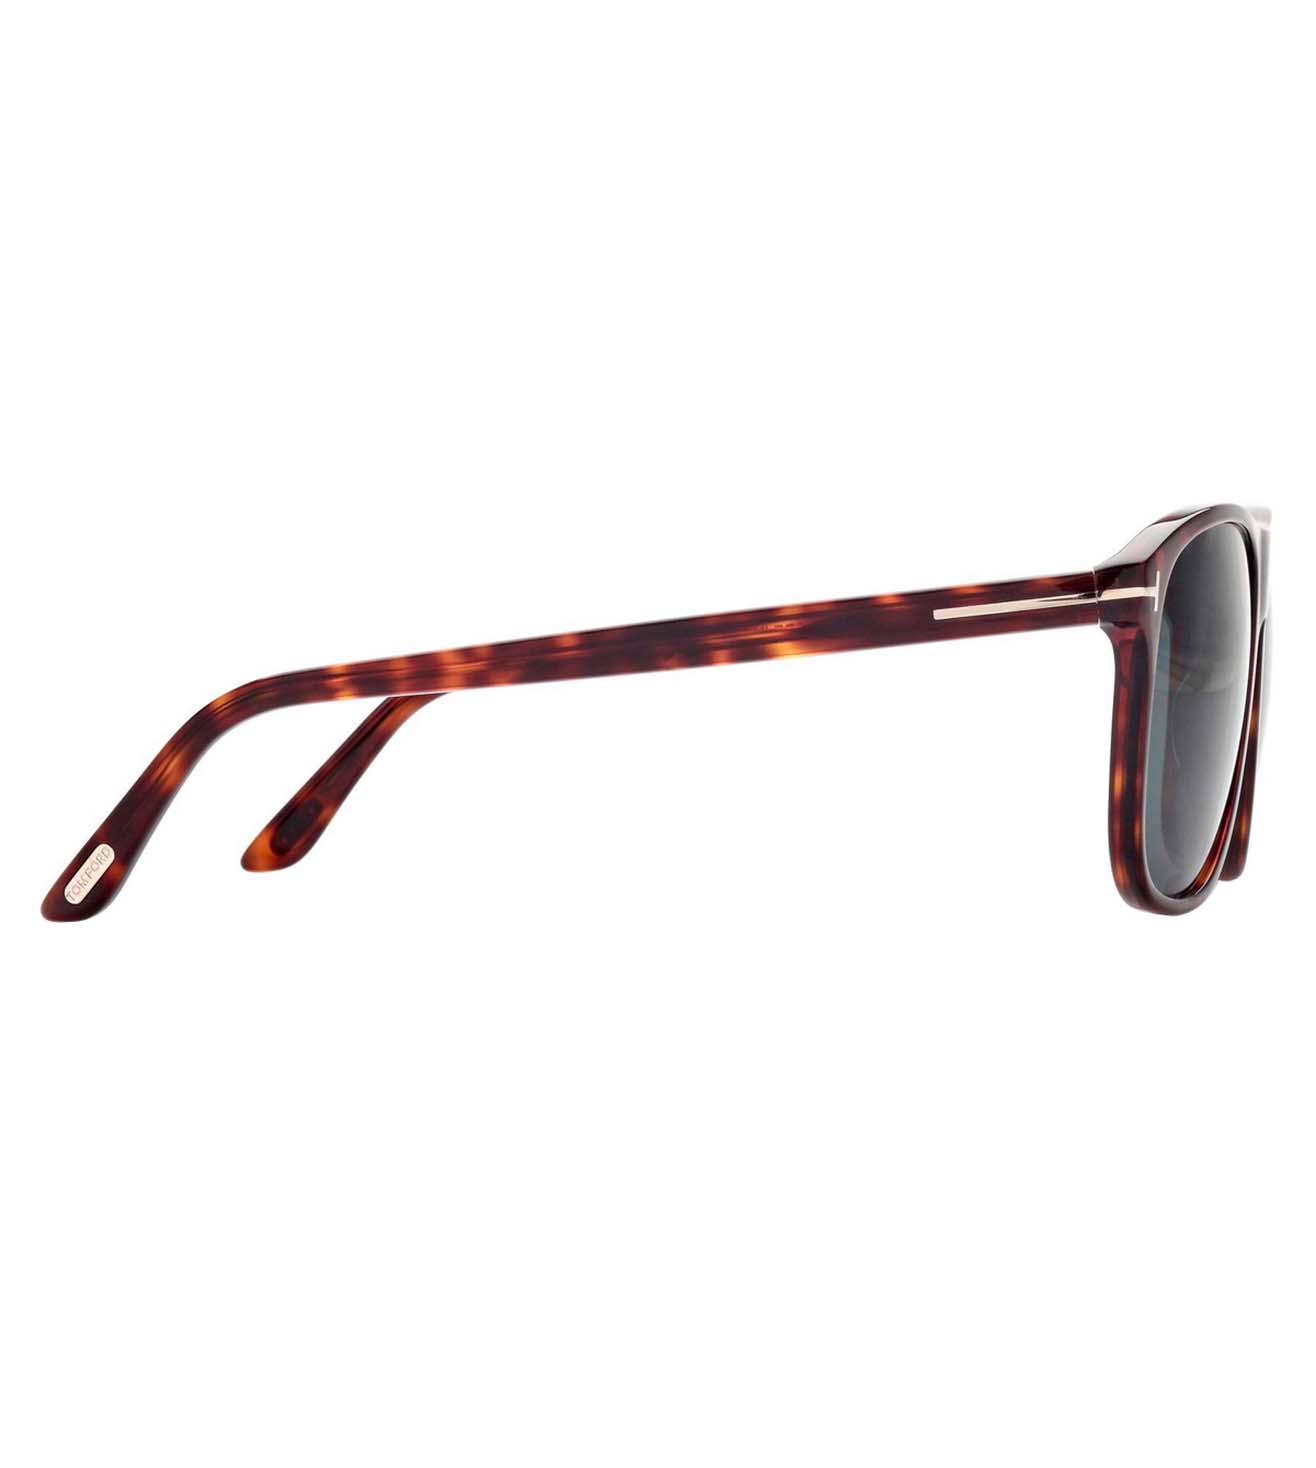 Tom Ford Men's Dark Teal Square Sunglasses